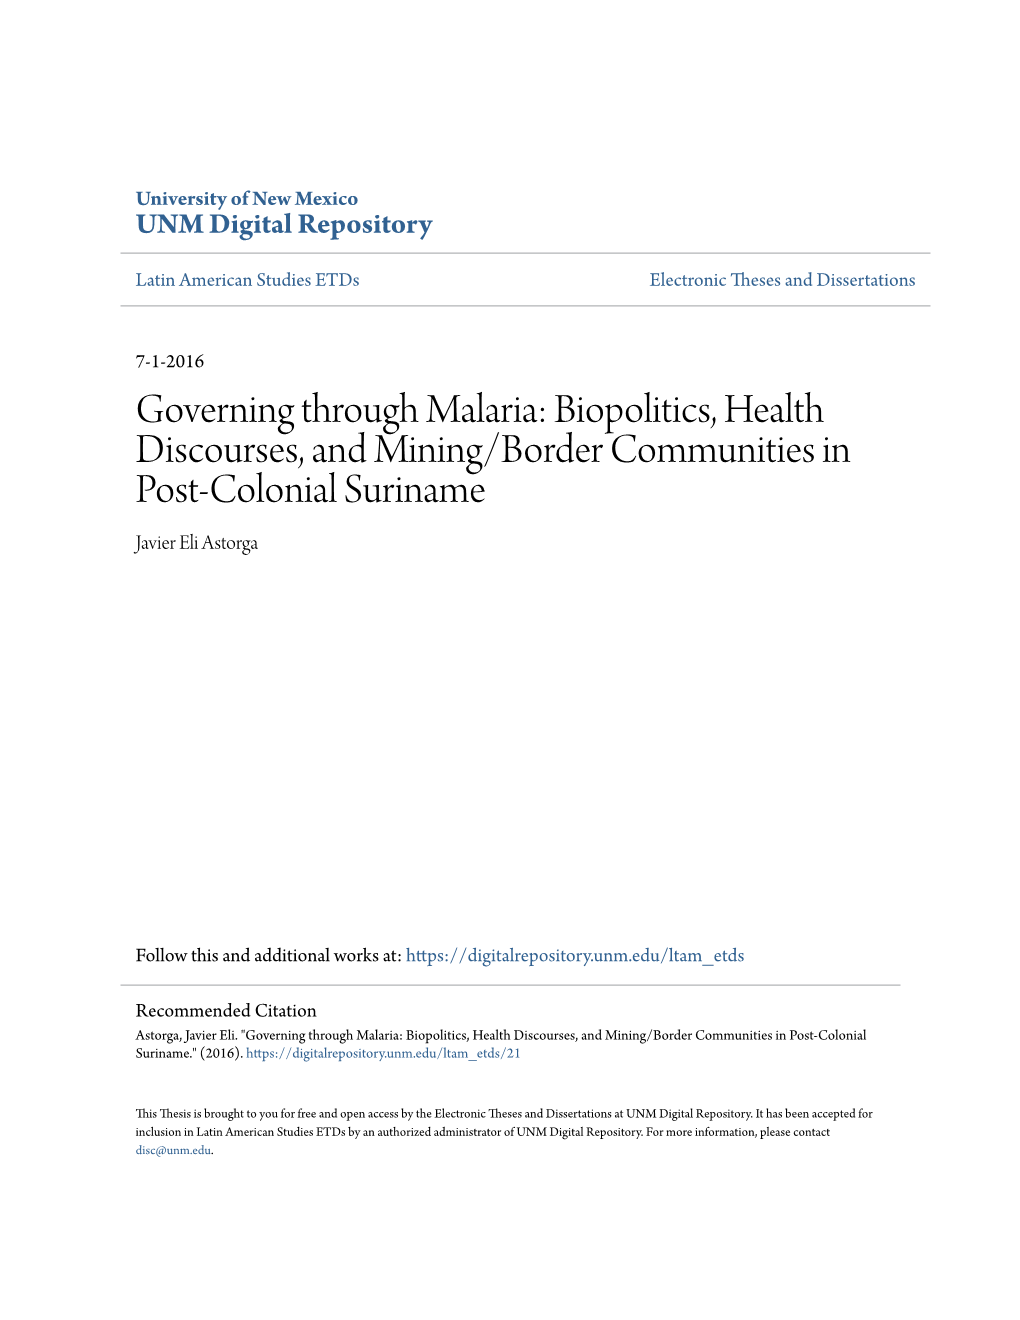 Governing Through Malaria: Biopolitics, Health Discourses, and Mining/Border Communities in Post-Colonial Suriname Javier Eli Astorga